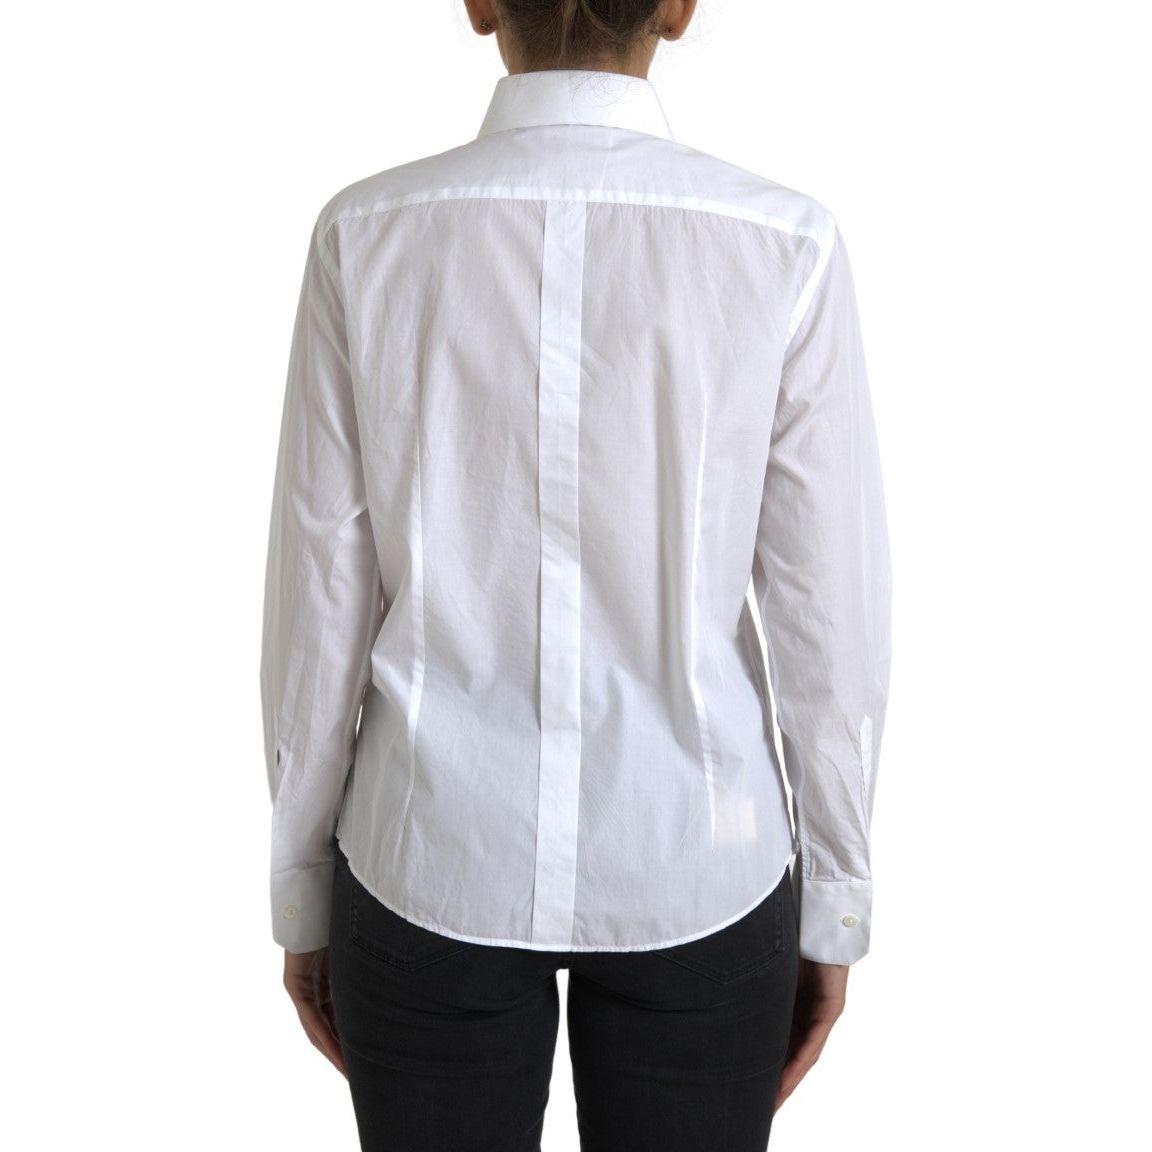 Dolce & Gabbana Elegant White Cotton Collared Top white-cotton-collared-long-sleeves-shirt-top